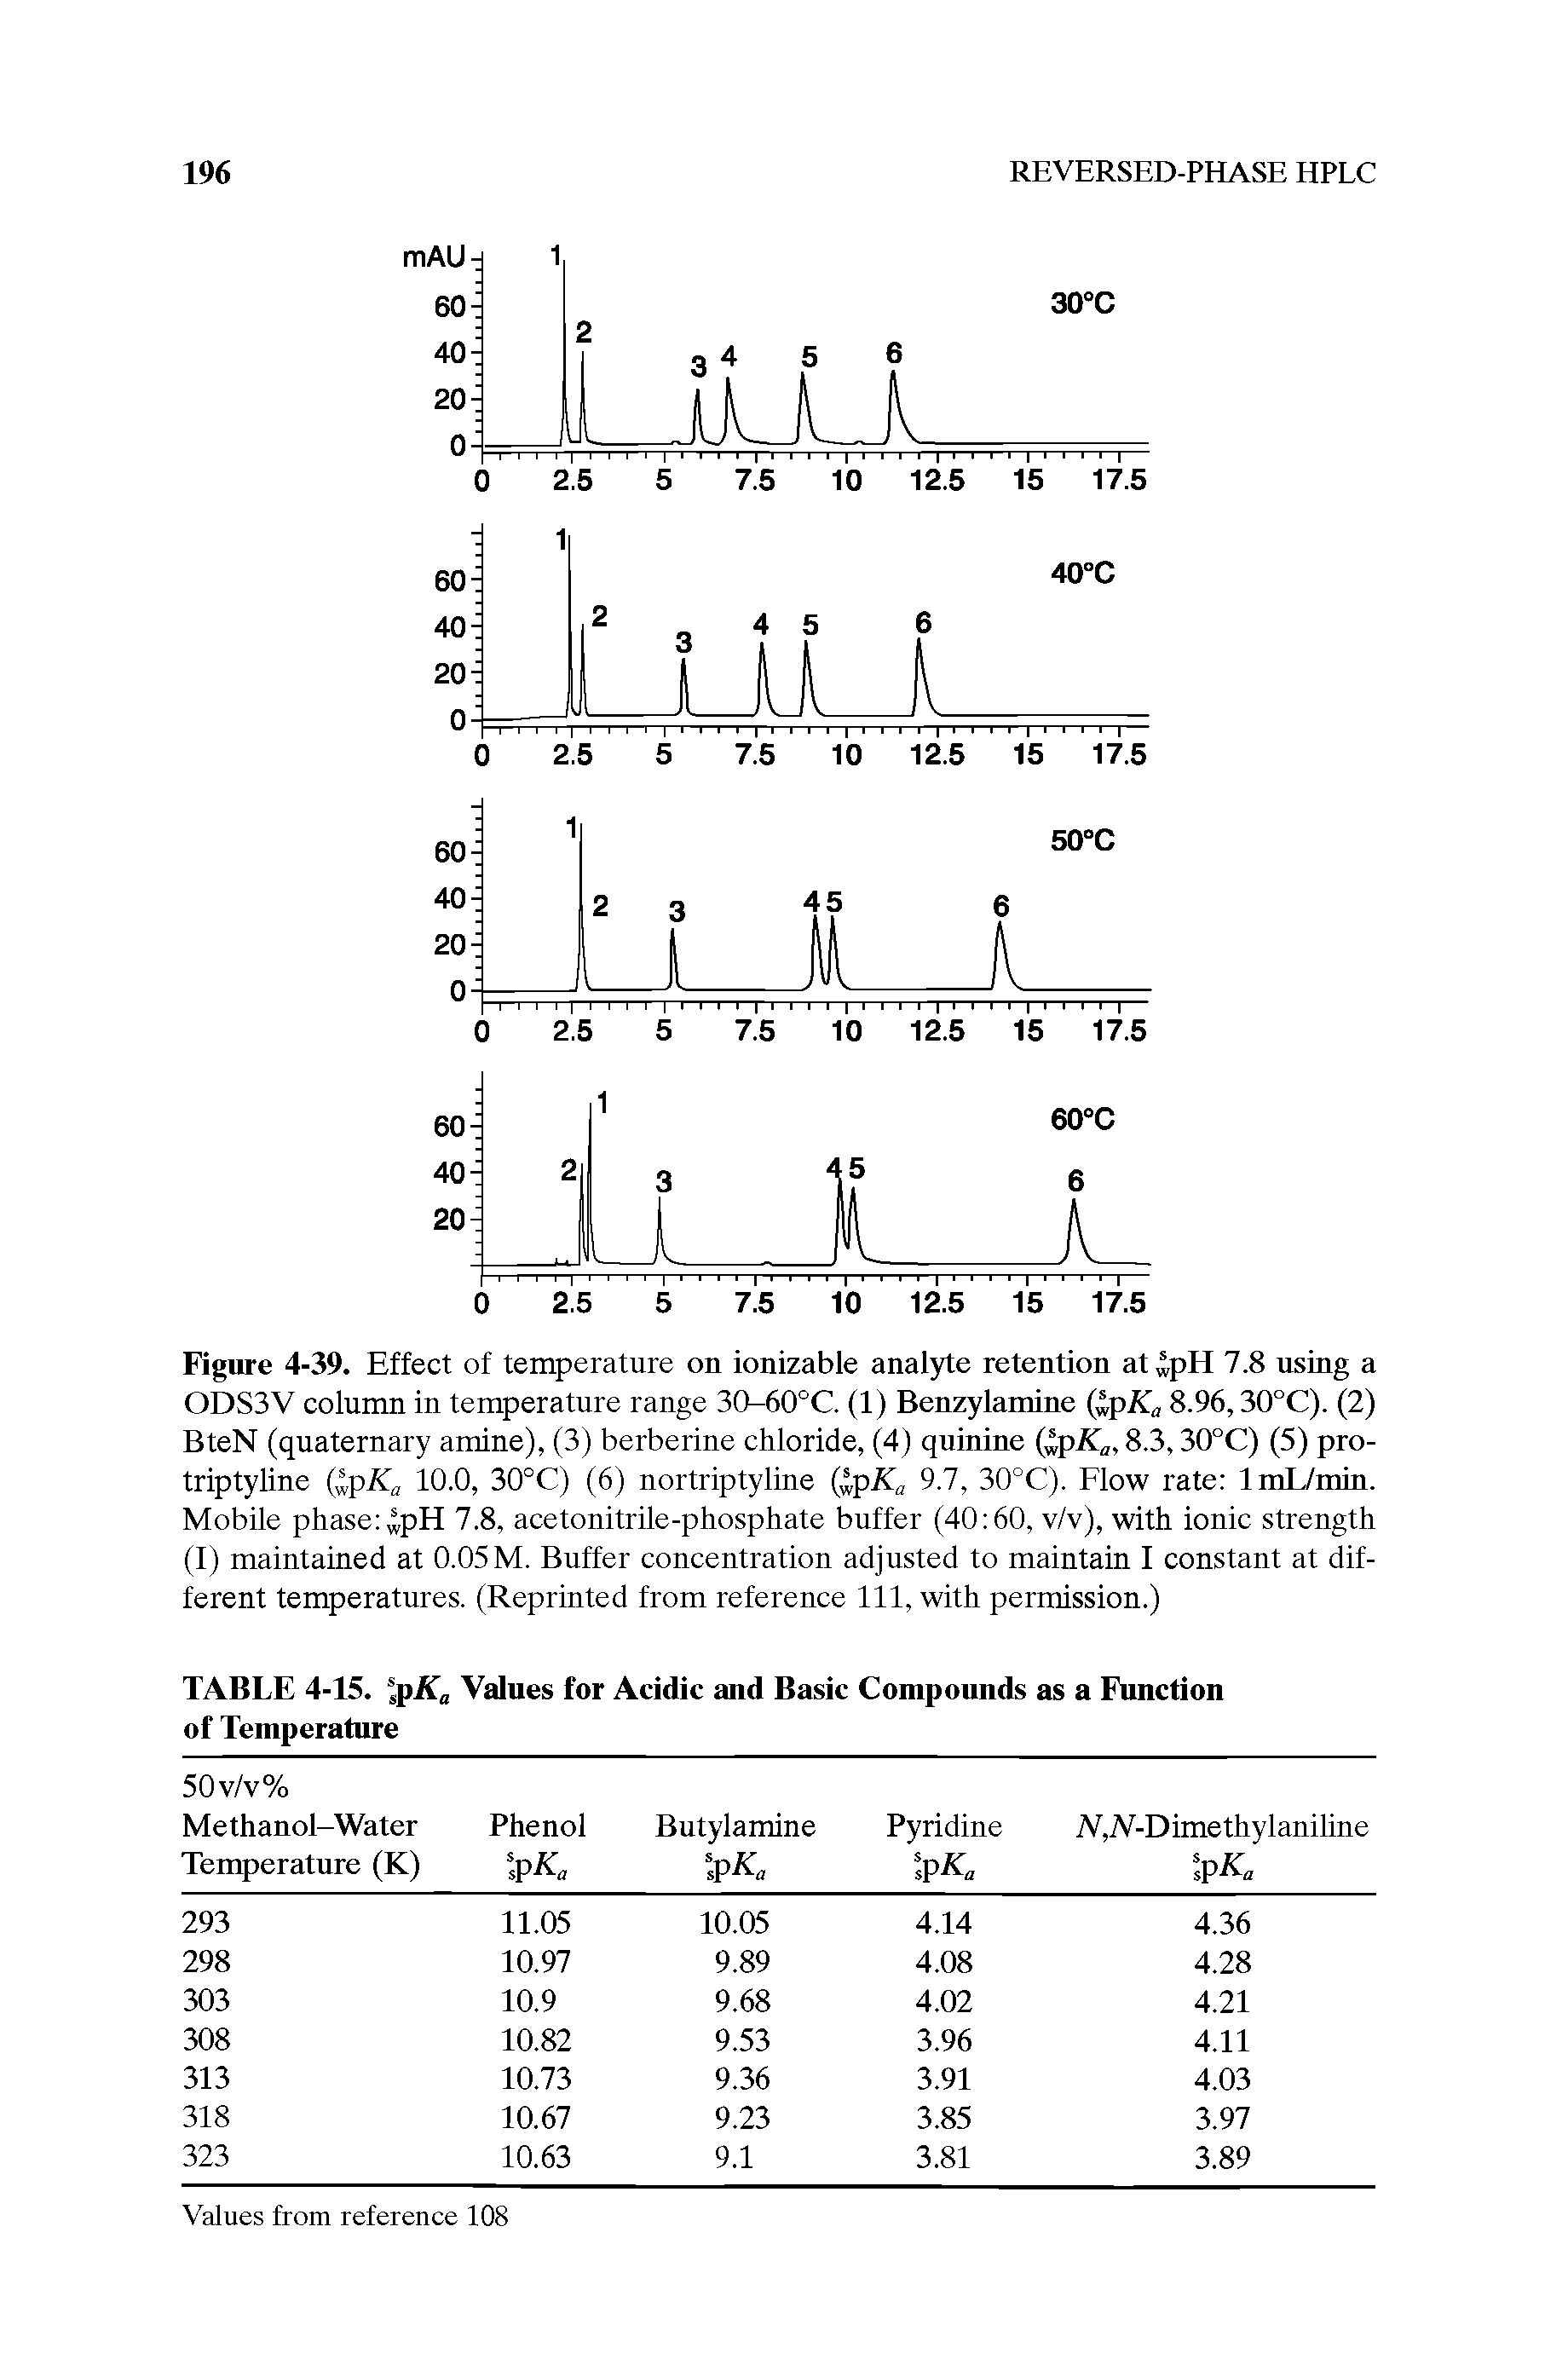 Figure 4-39. Effect of temperature on ionizable analyte retention at pH 7.8 nsing a ODS3V column in temperature range 30-60°C. (1) Benzylamine 8.96,30°C). (2) BteN (quaternary amine), (3) berberine chloride, (4) qninine (4p.K), 8.3,30°C) (5) protriptyline 10.0, 30°C) (6) nortriptyline Q,pKa 9.1, 30°C). Flow rate ImL/min.